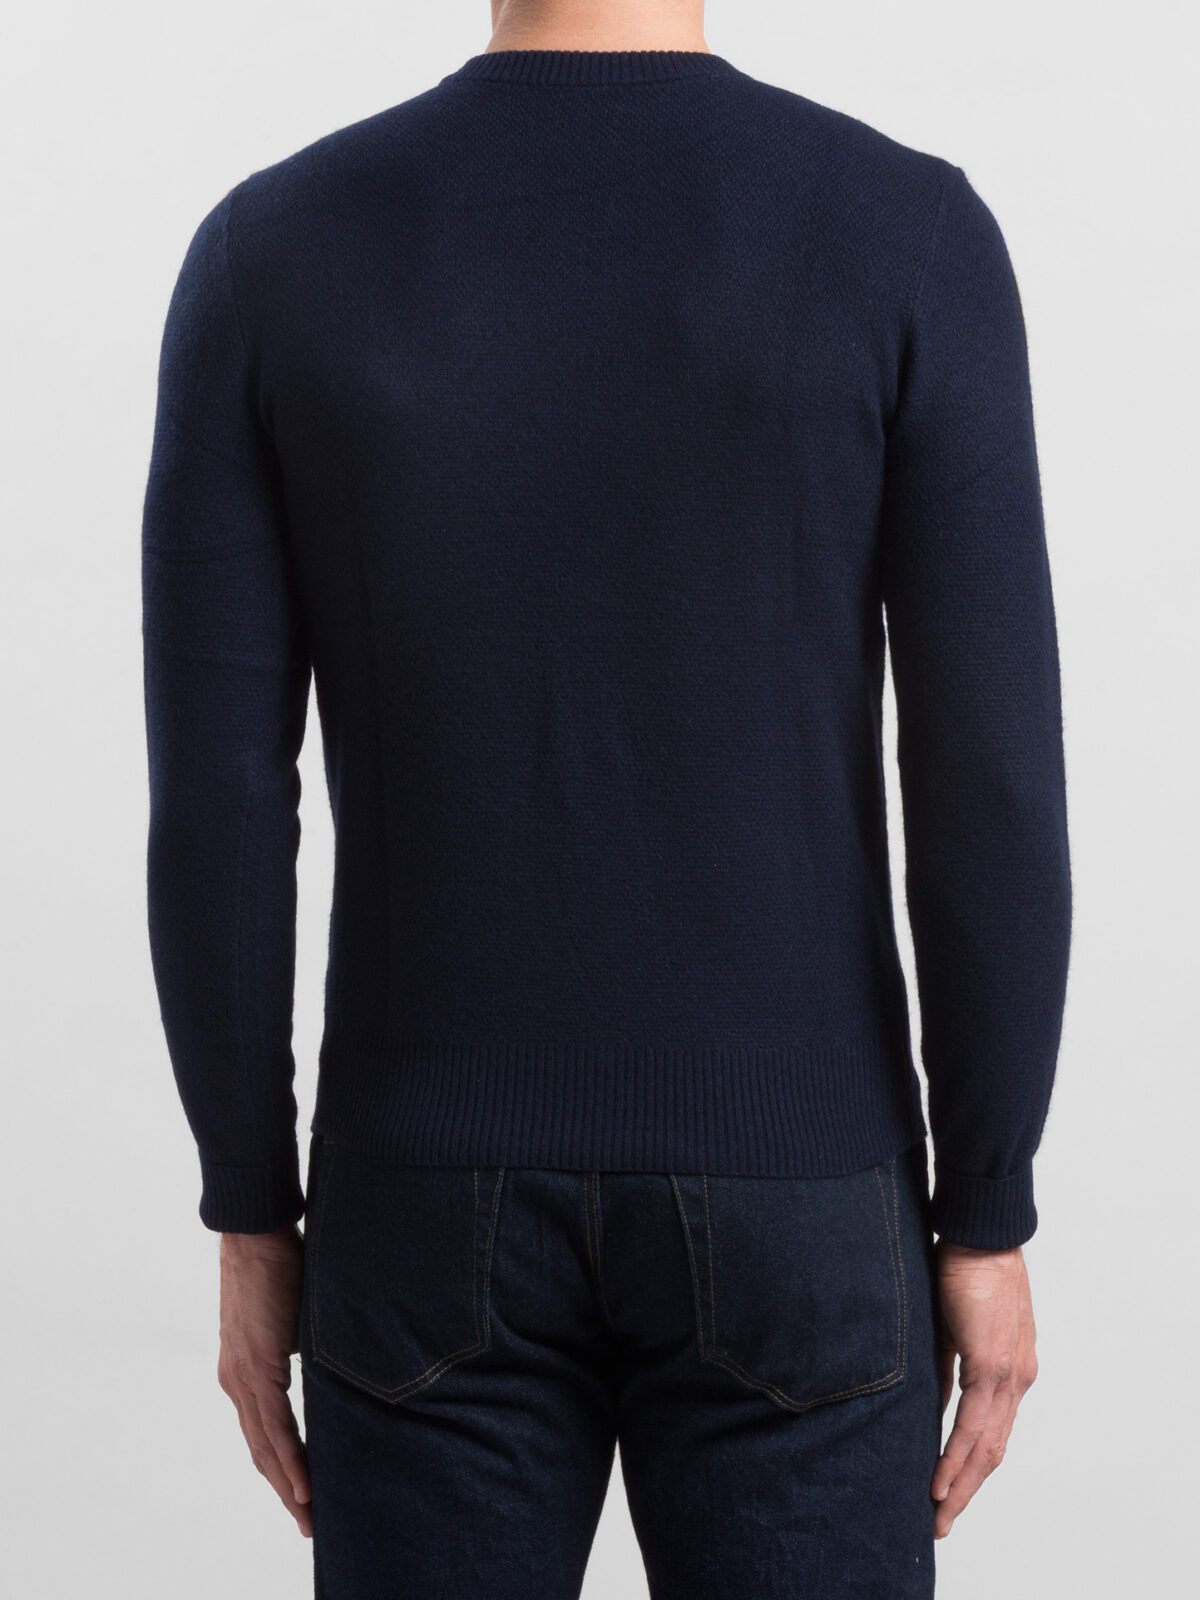 Navy Cobble Stitch Cashmere Sweater